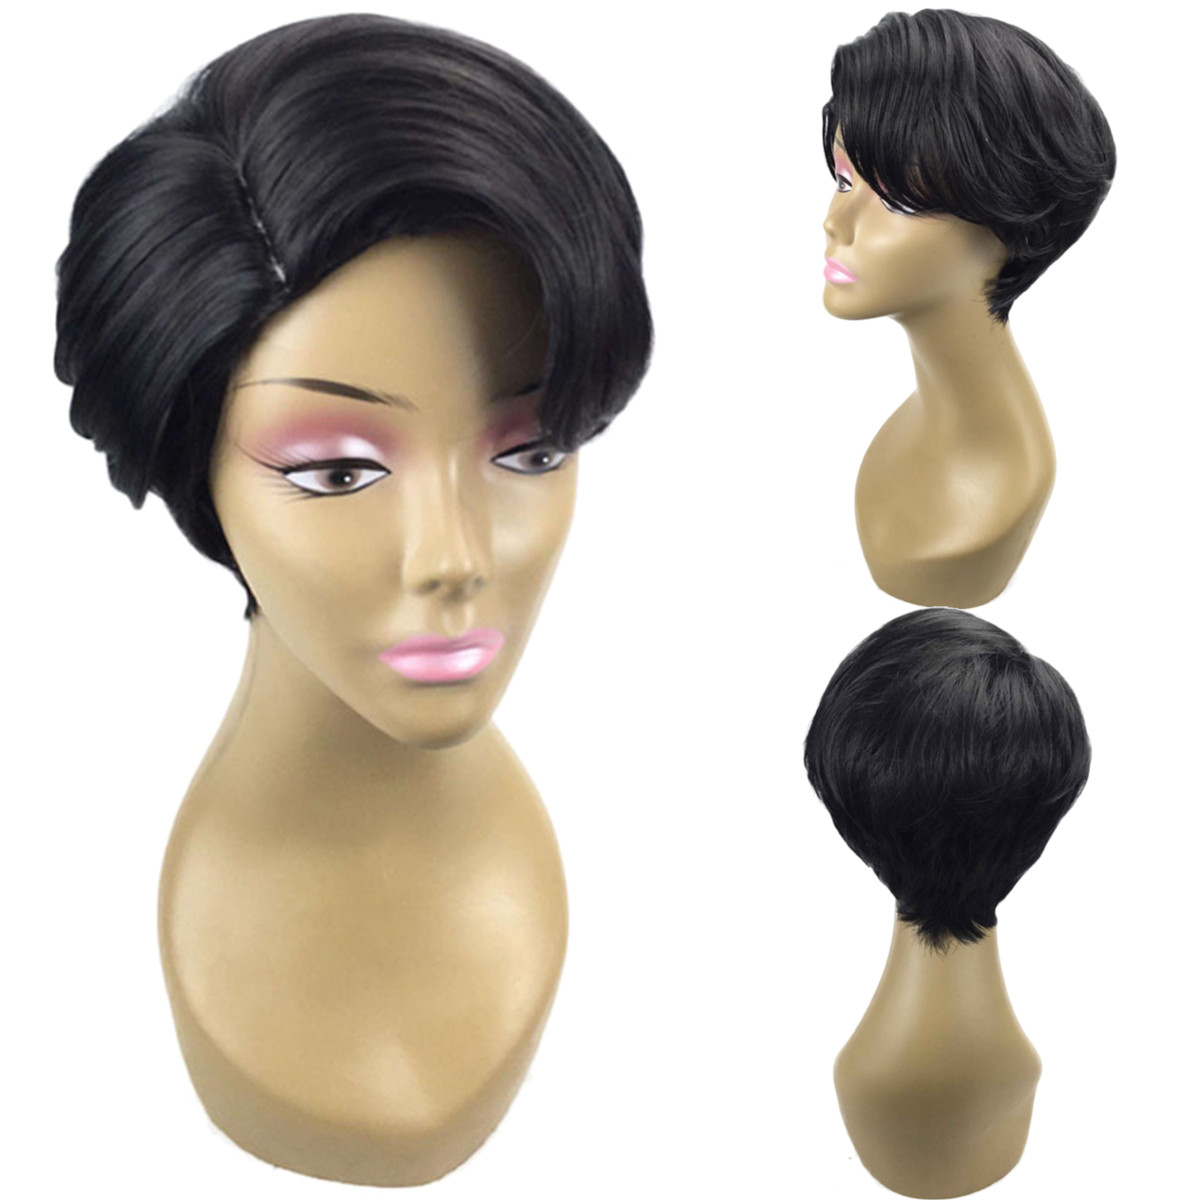 

Women Natural Black Short Bob Hair Ombre Wigs